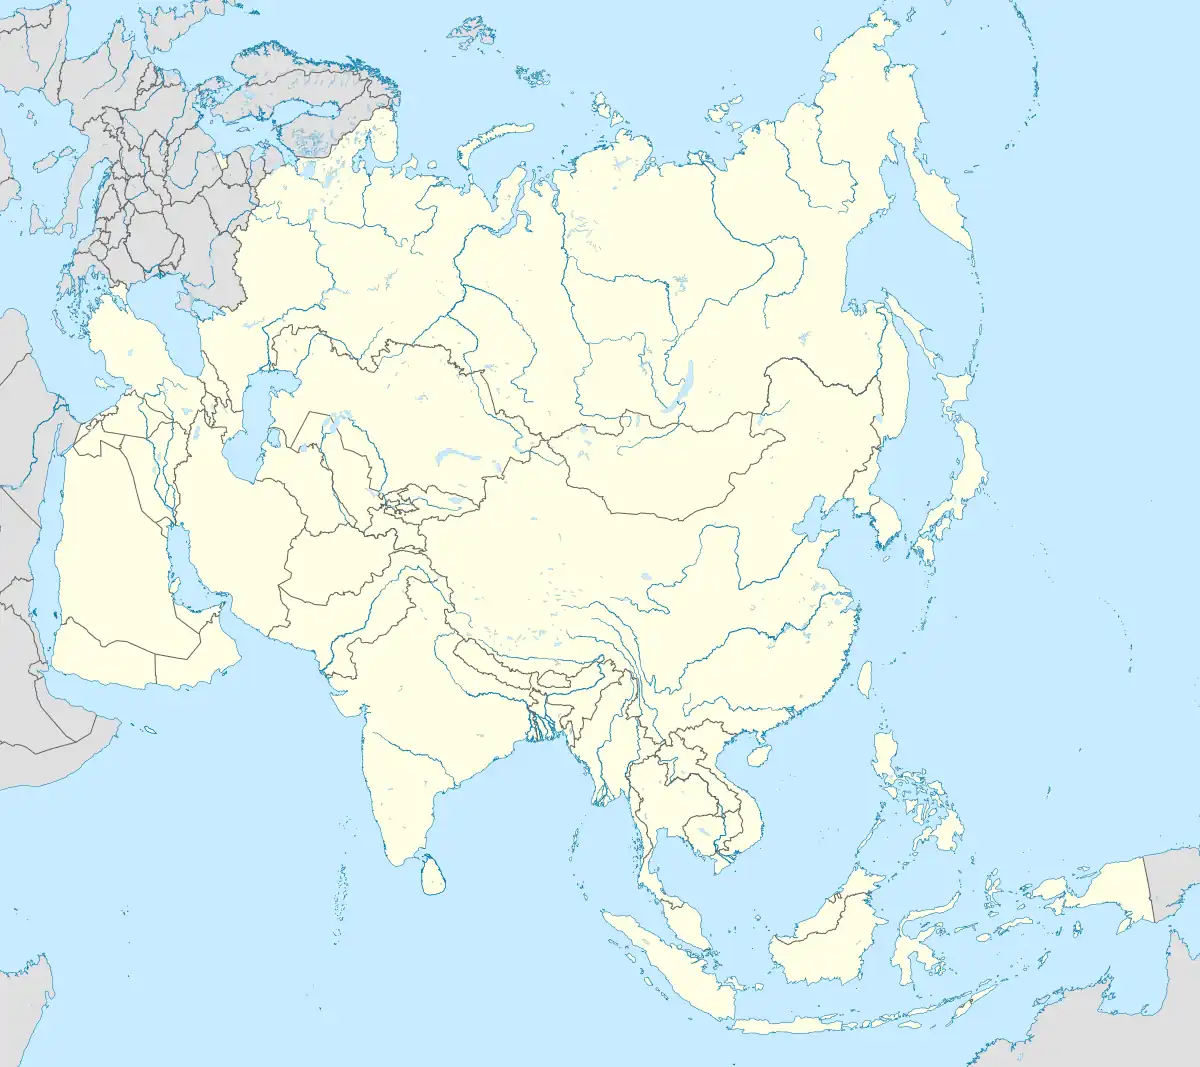 Hinglaj Mata mandir is located in Asia